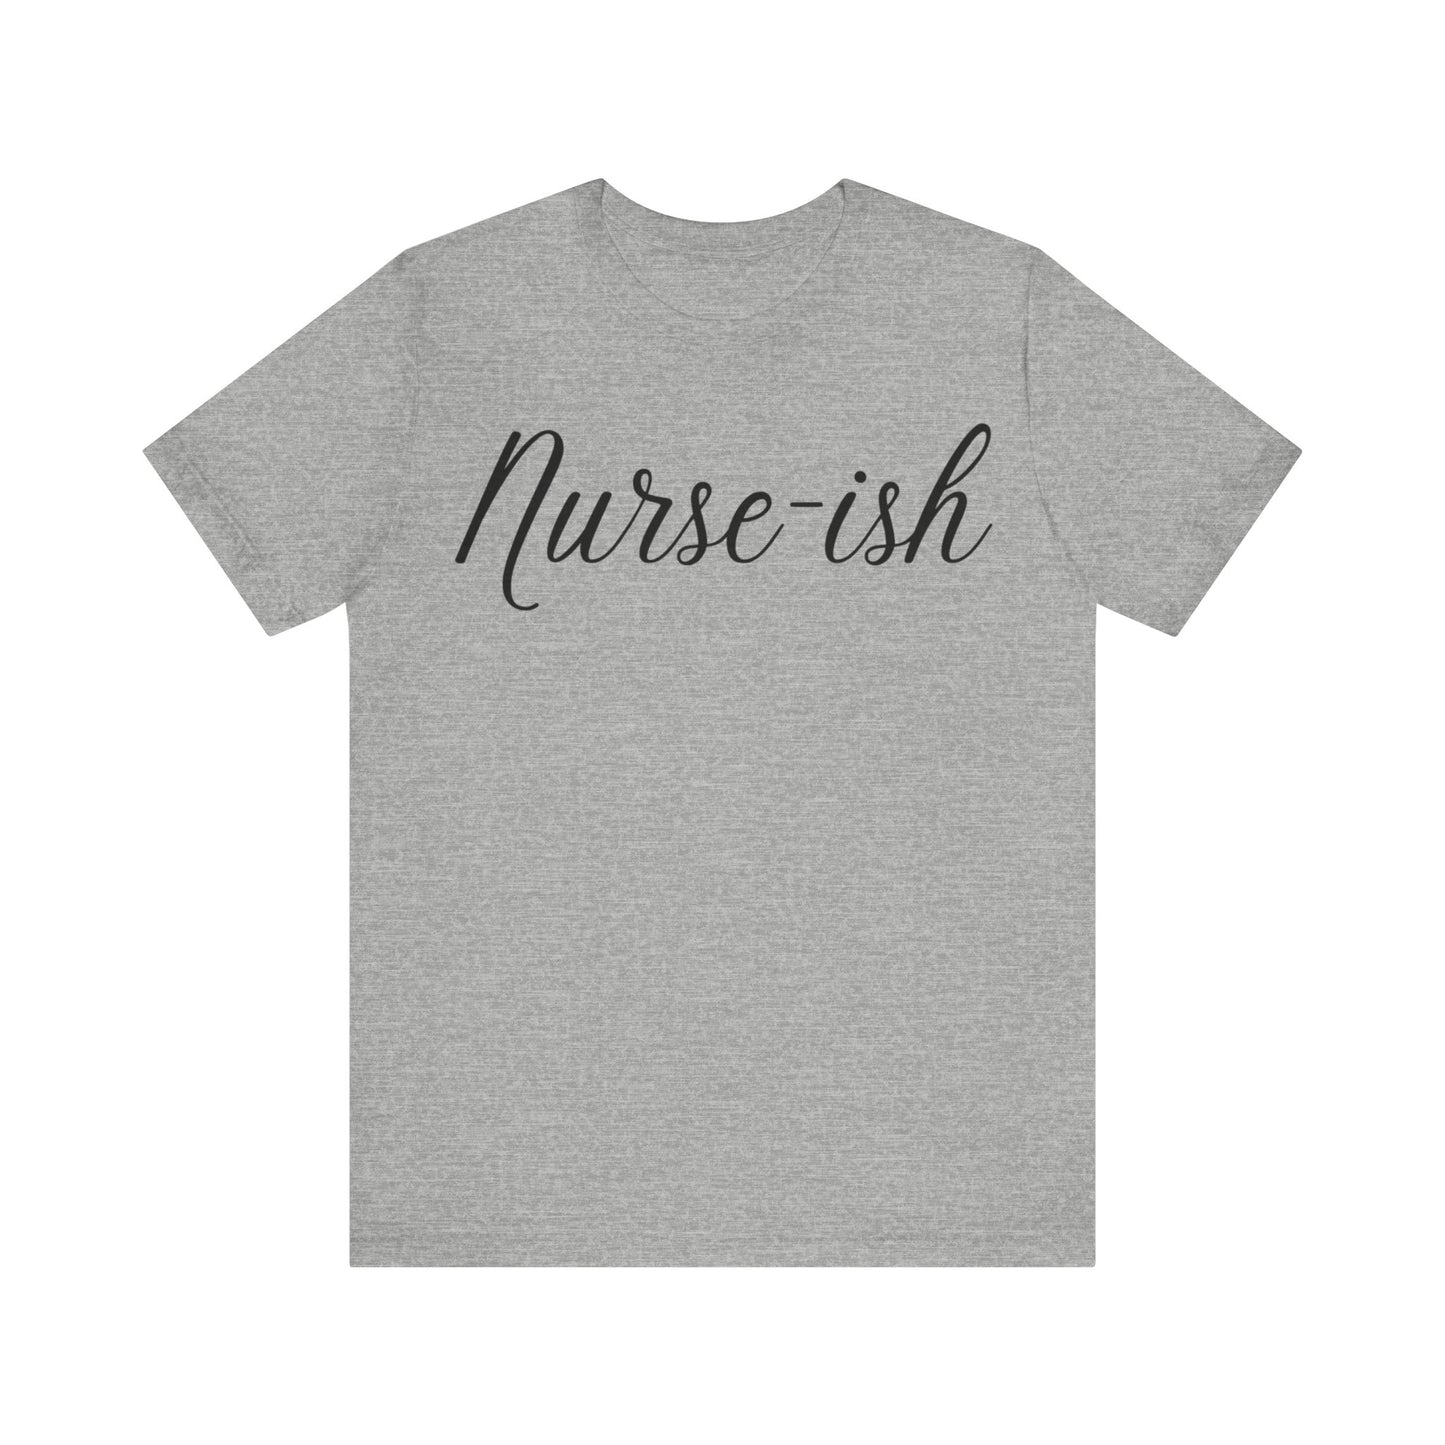 "Nurse-ish" - Short Sleeve